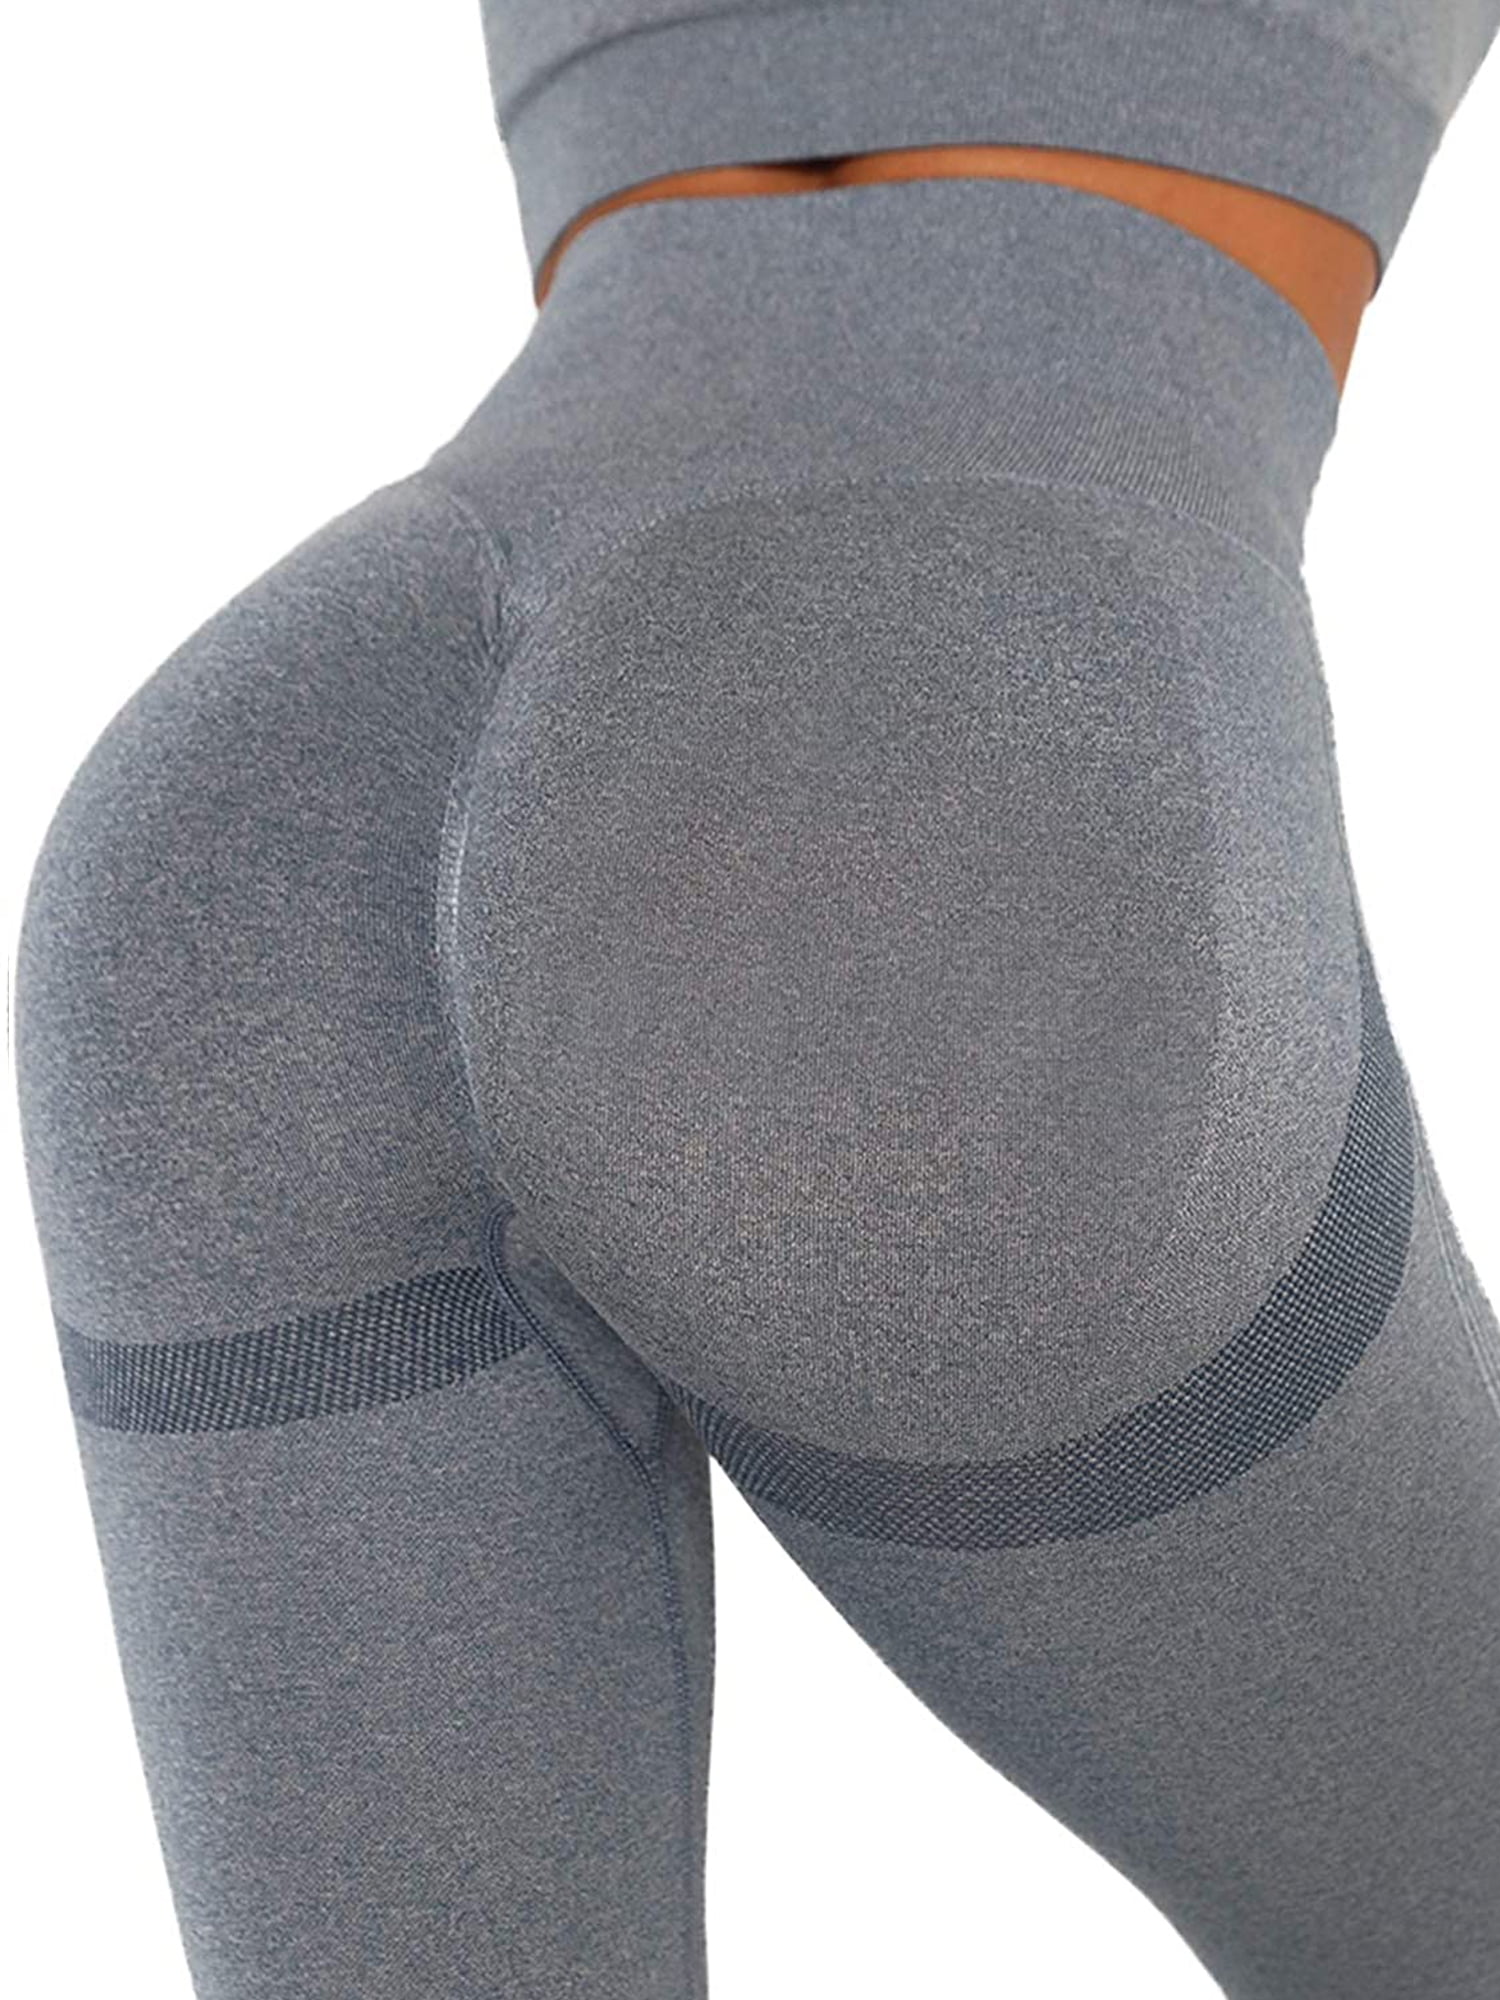 DUROFIT Sports Running Tights Yoga Pants Workout Gym Leggings High Waist for Women Grey L 